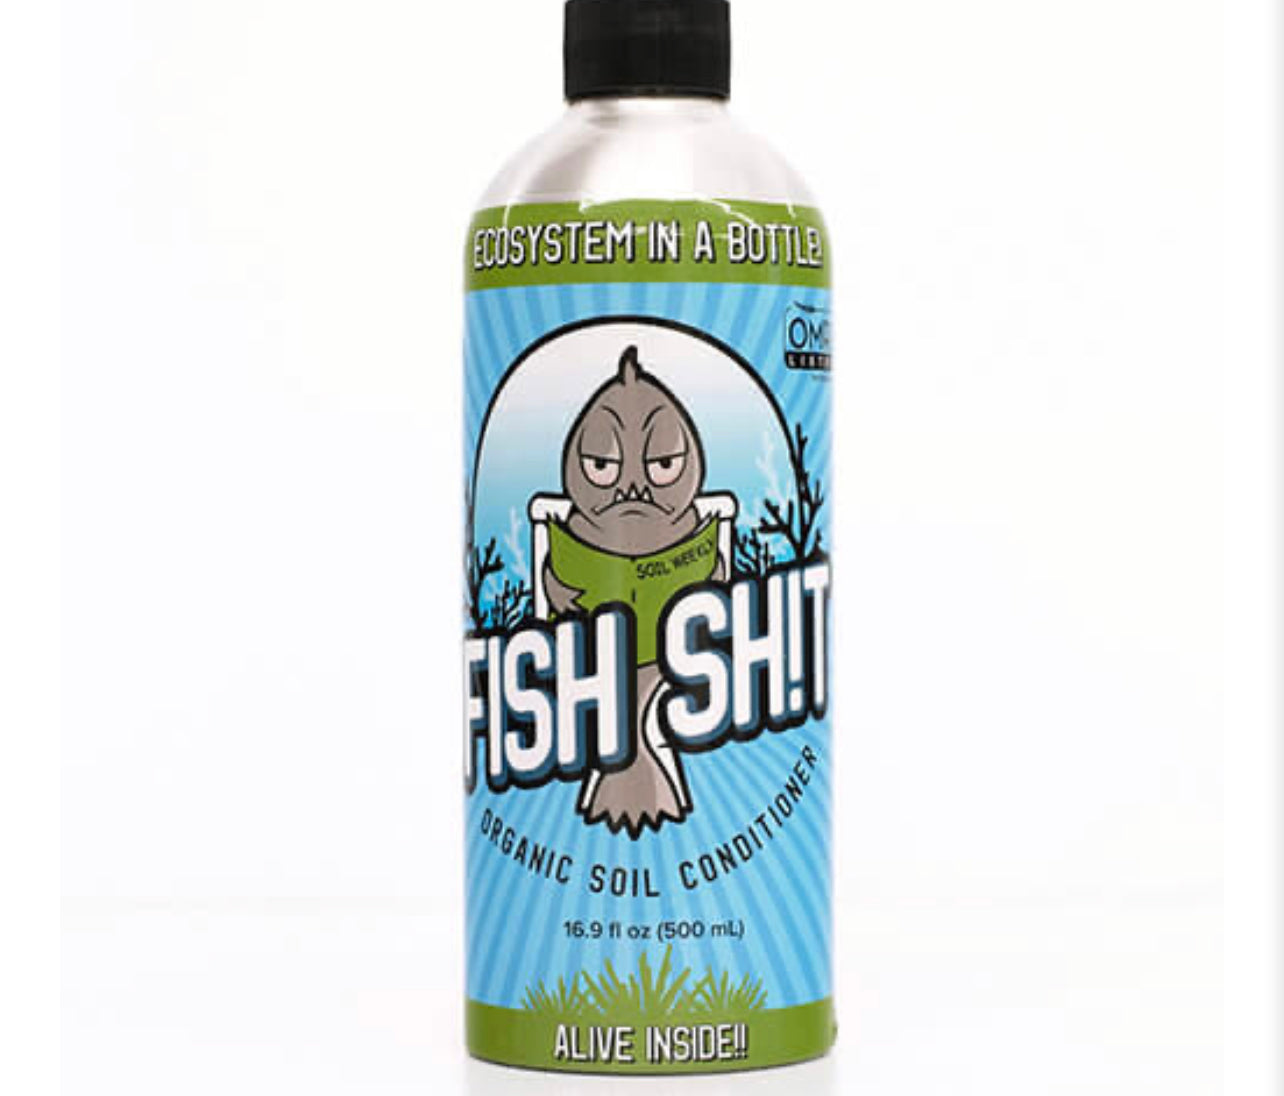 Fish Sh!t (Organic Soil Conditioner)